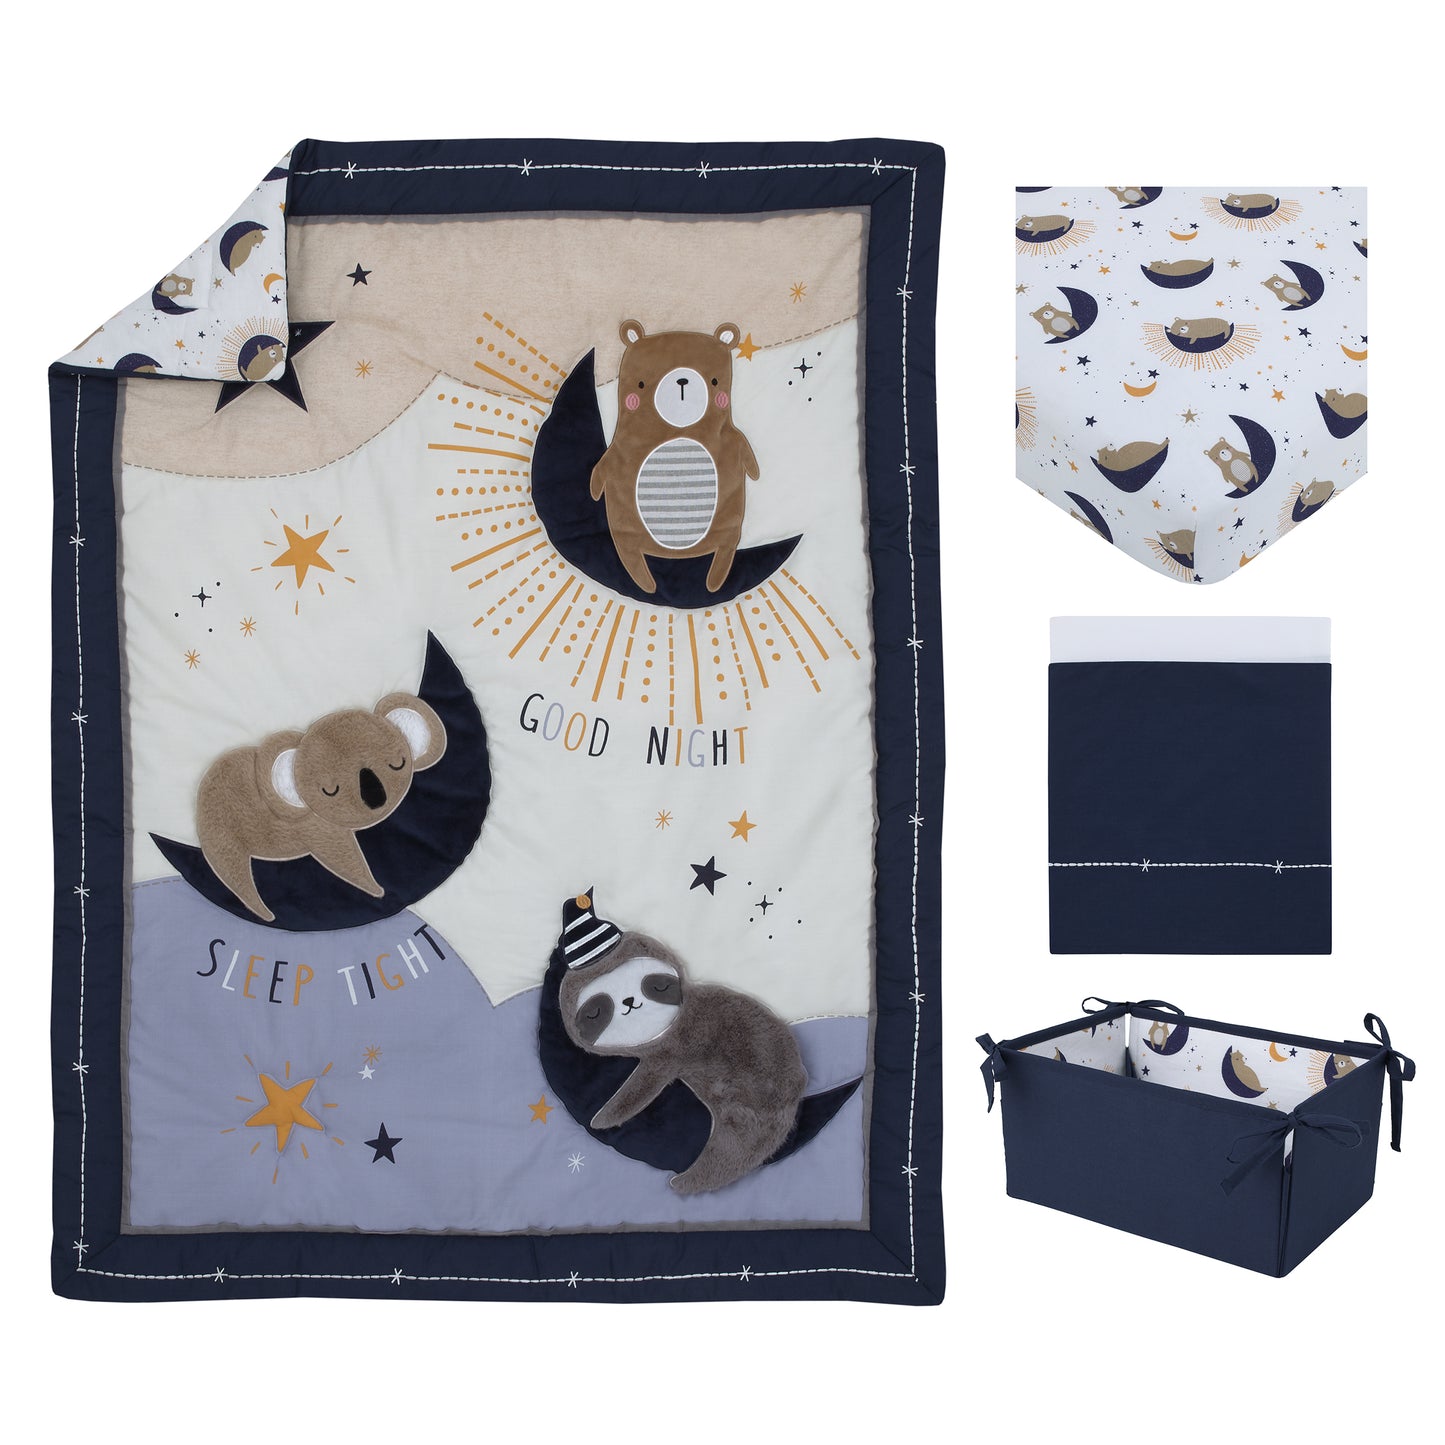 NoJo Goodnight Sleep Tight White and Blue Koala, Sloth, Bear, Star, and Moon 4 Piece Nursery Crib Bedding Set - Comforter, 100% Cotton Fitted Crib Sheet, Crib Skirt, and Storage